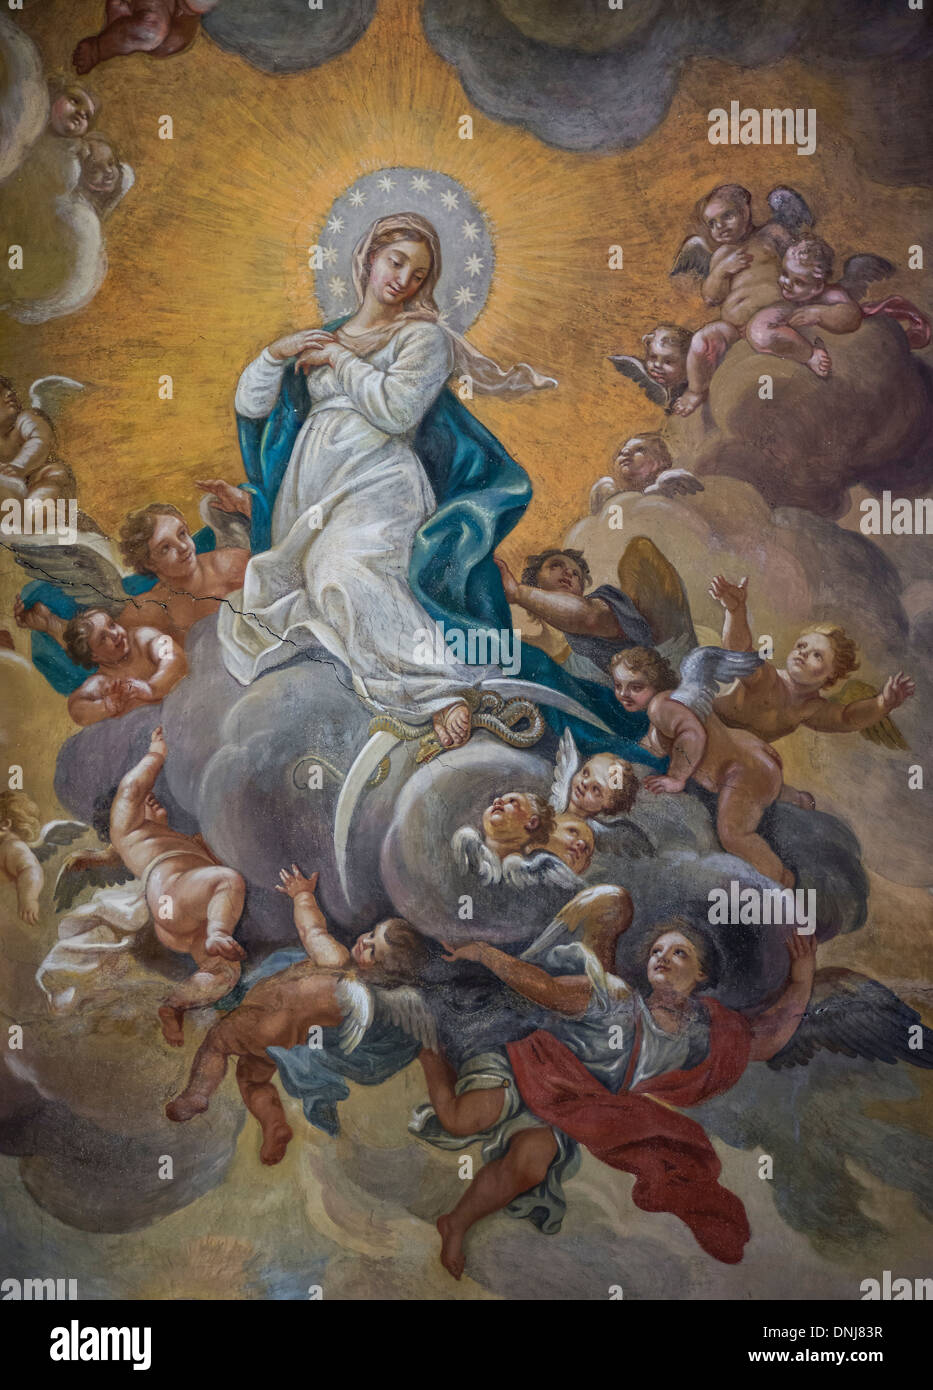 Cieling Fresko von der Annahme, Santa Maria Maddalena, Rom, Italien Stockfoto